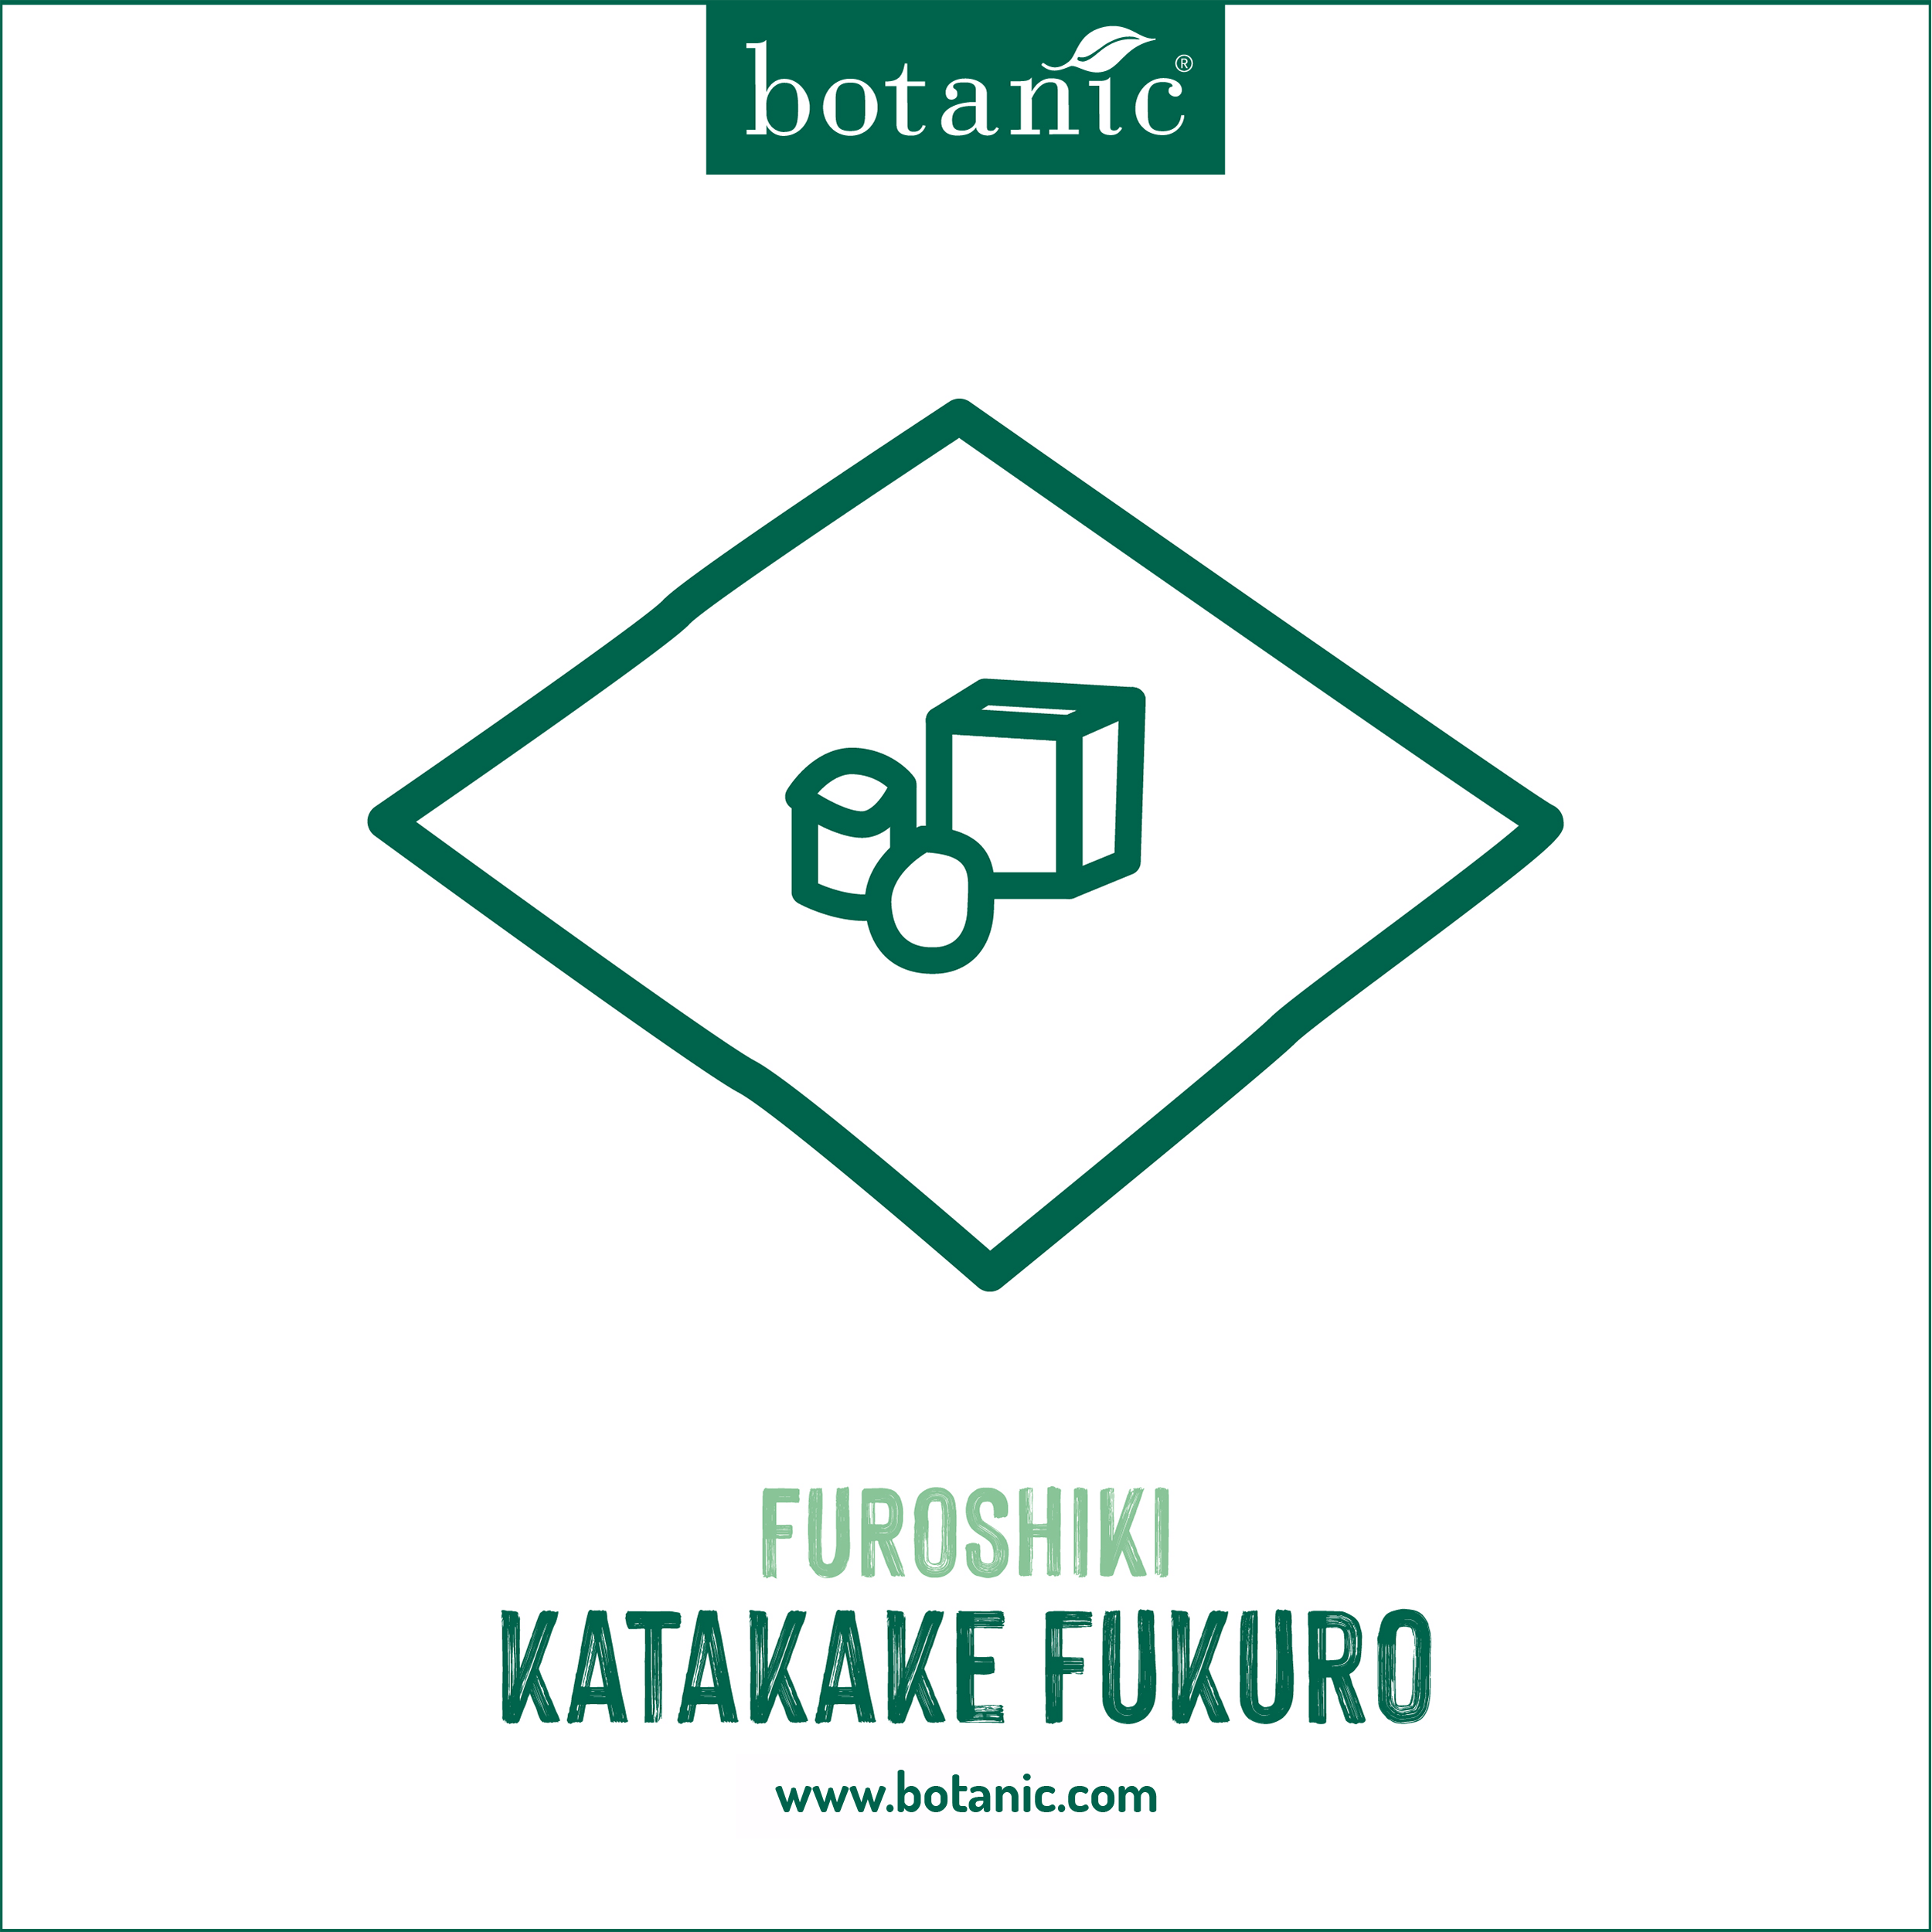 Furoshiki Katakake Fukuro  pour emballer vos cadeaux de forme originale